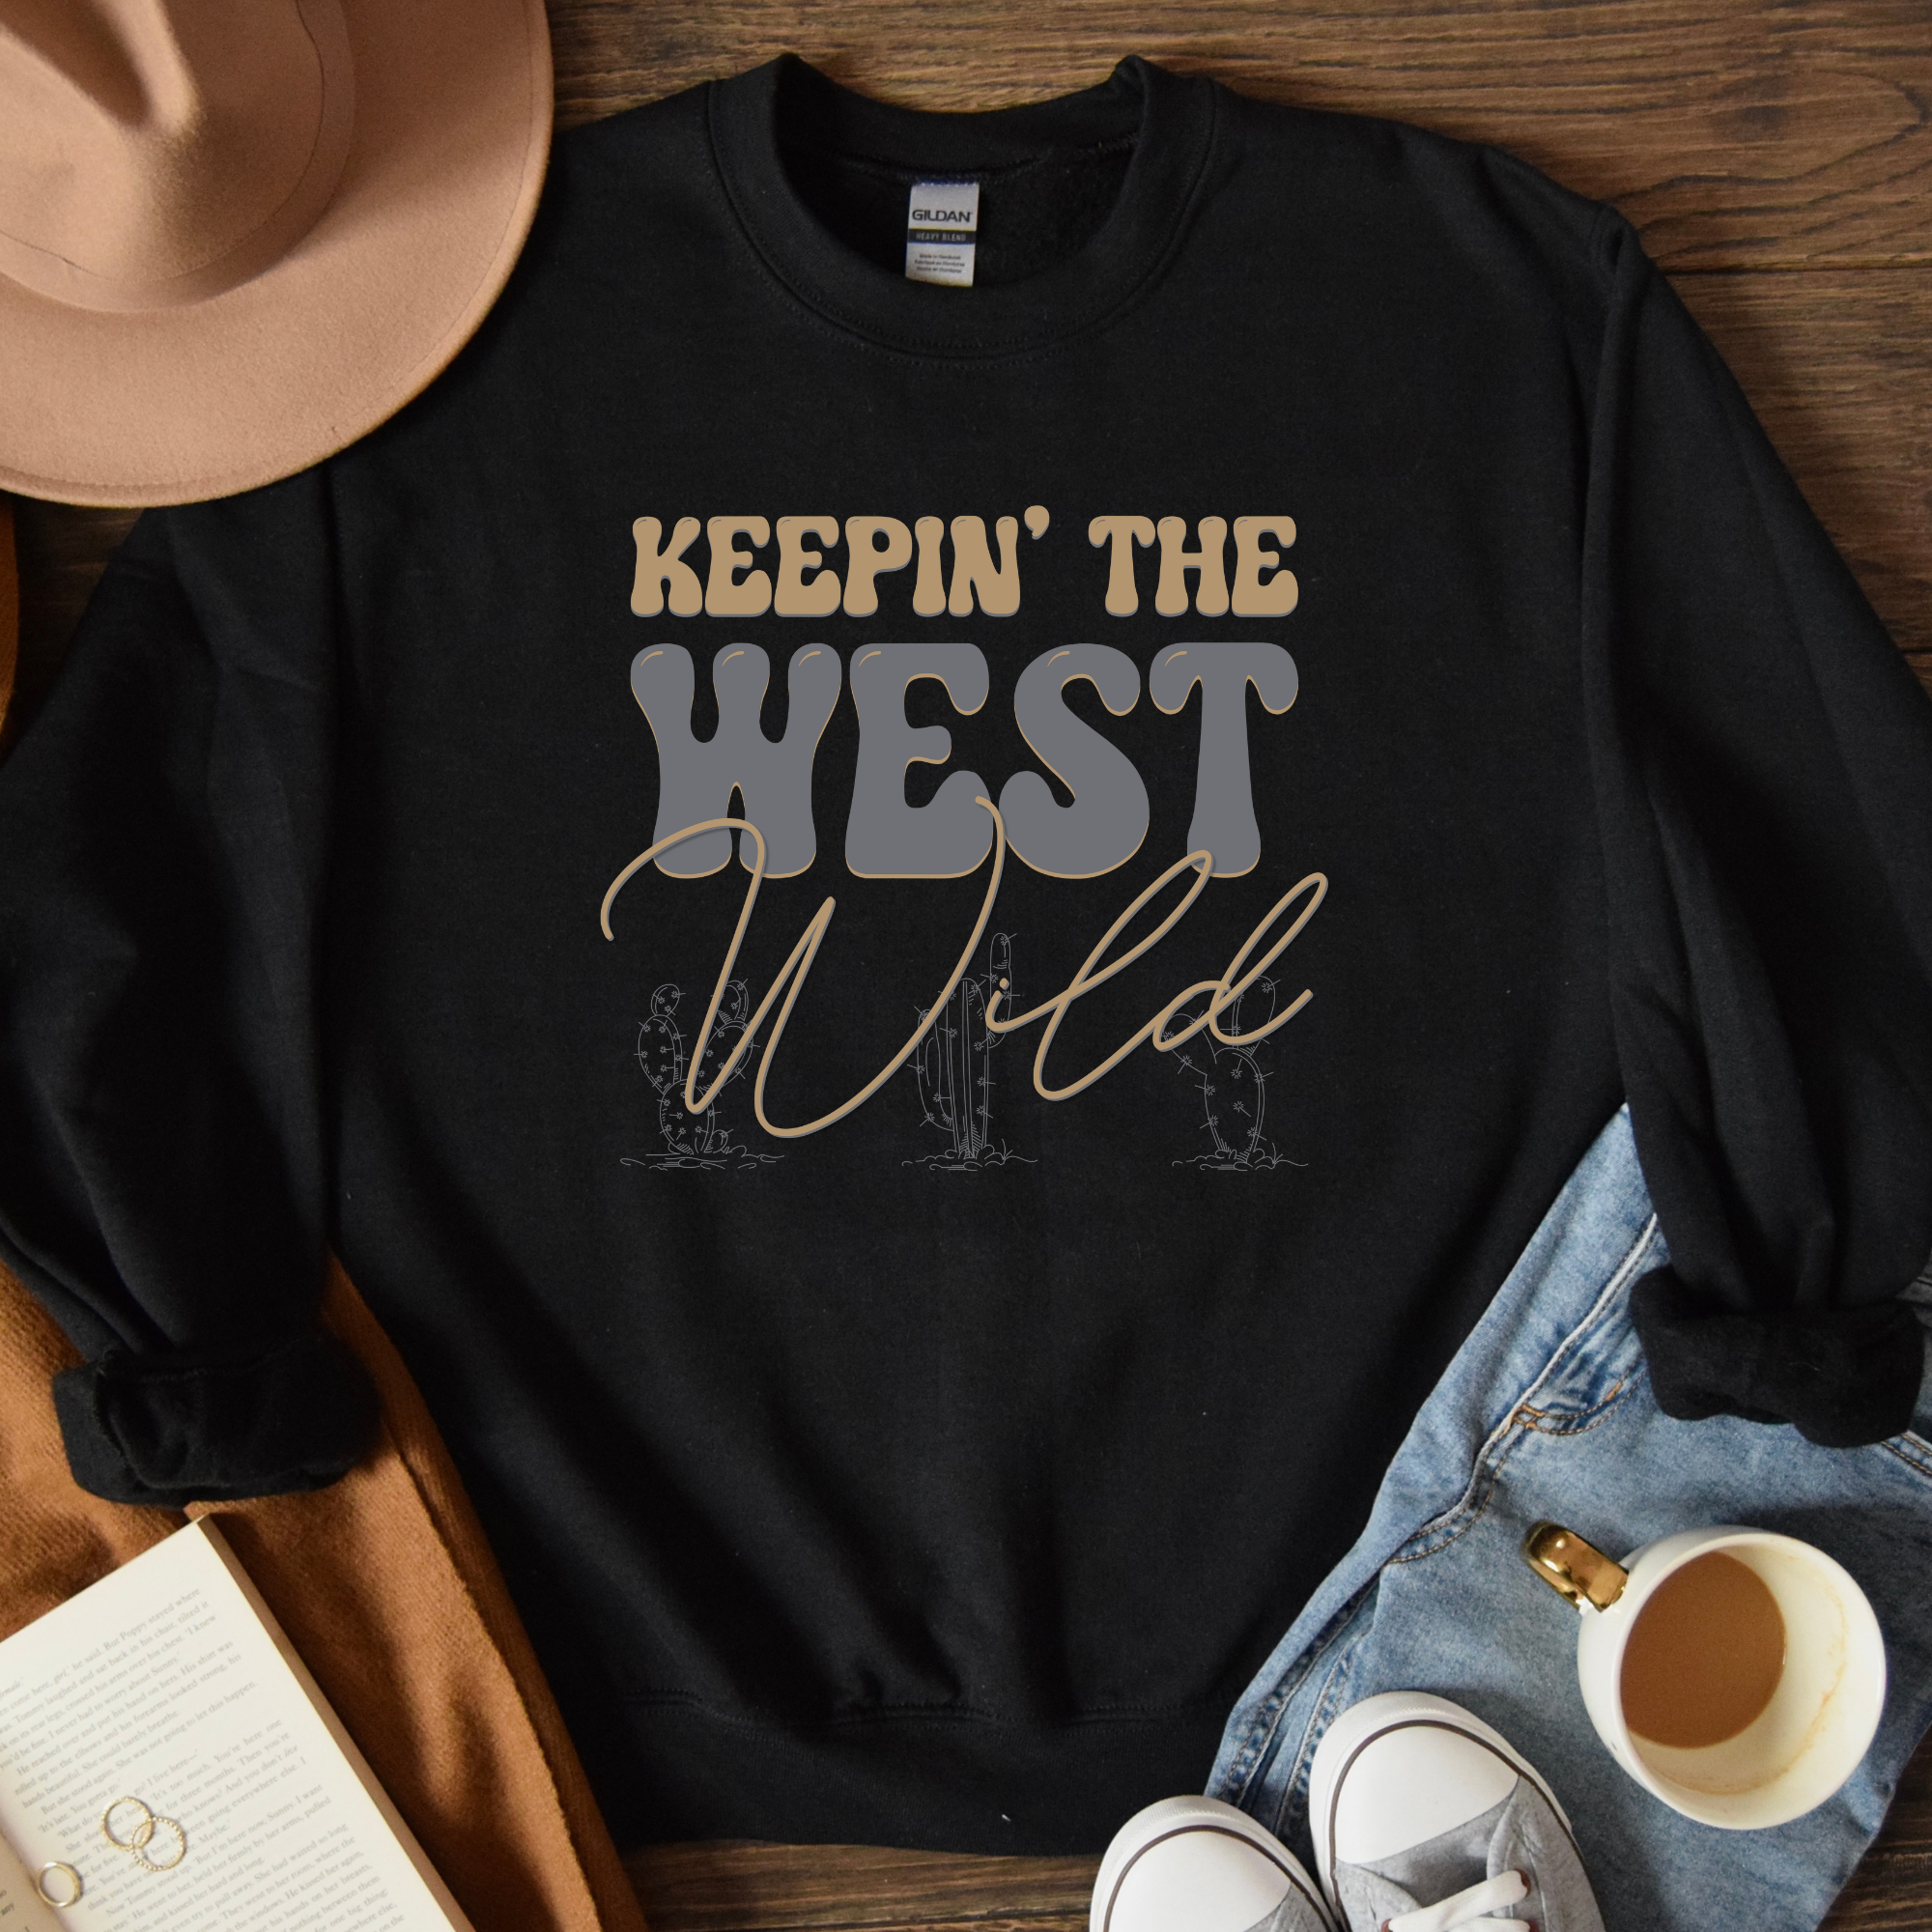 Keepin’ The West Wild Crew